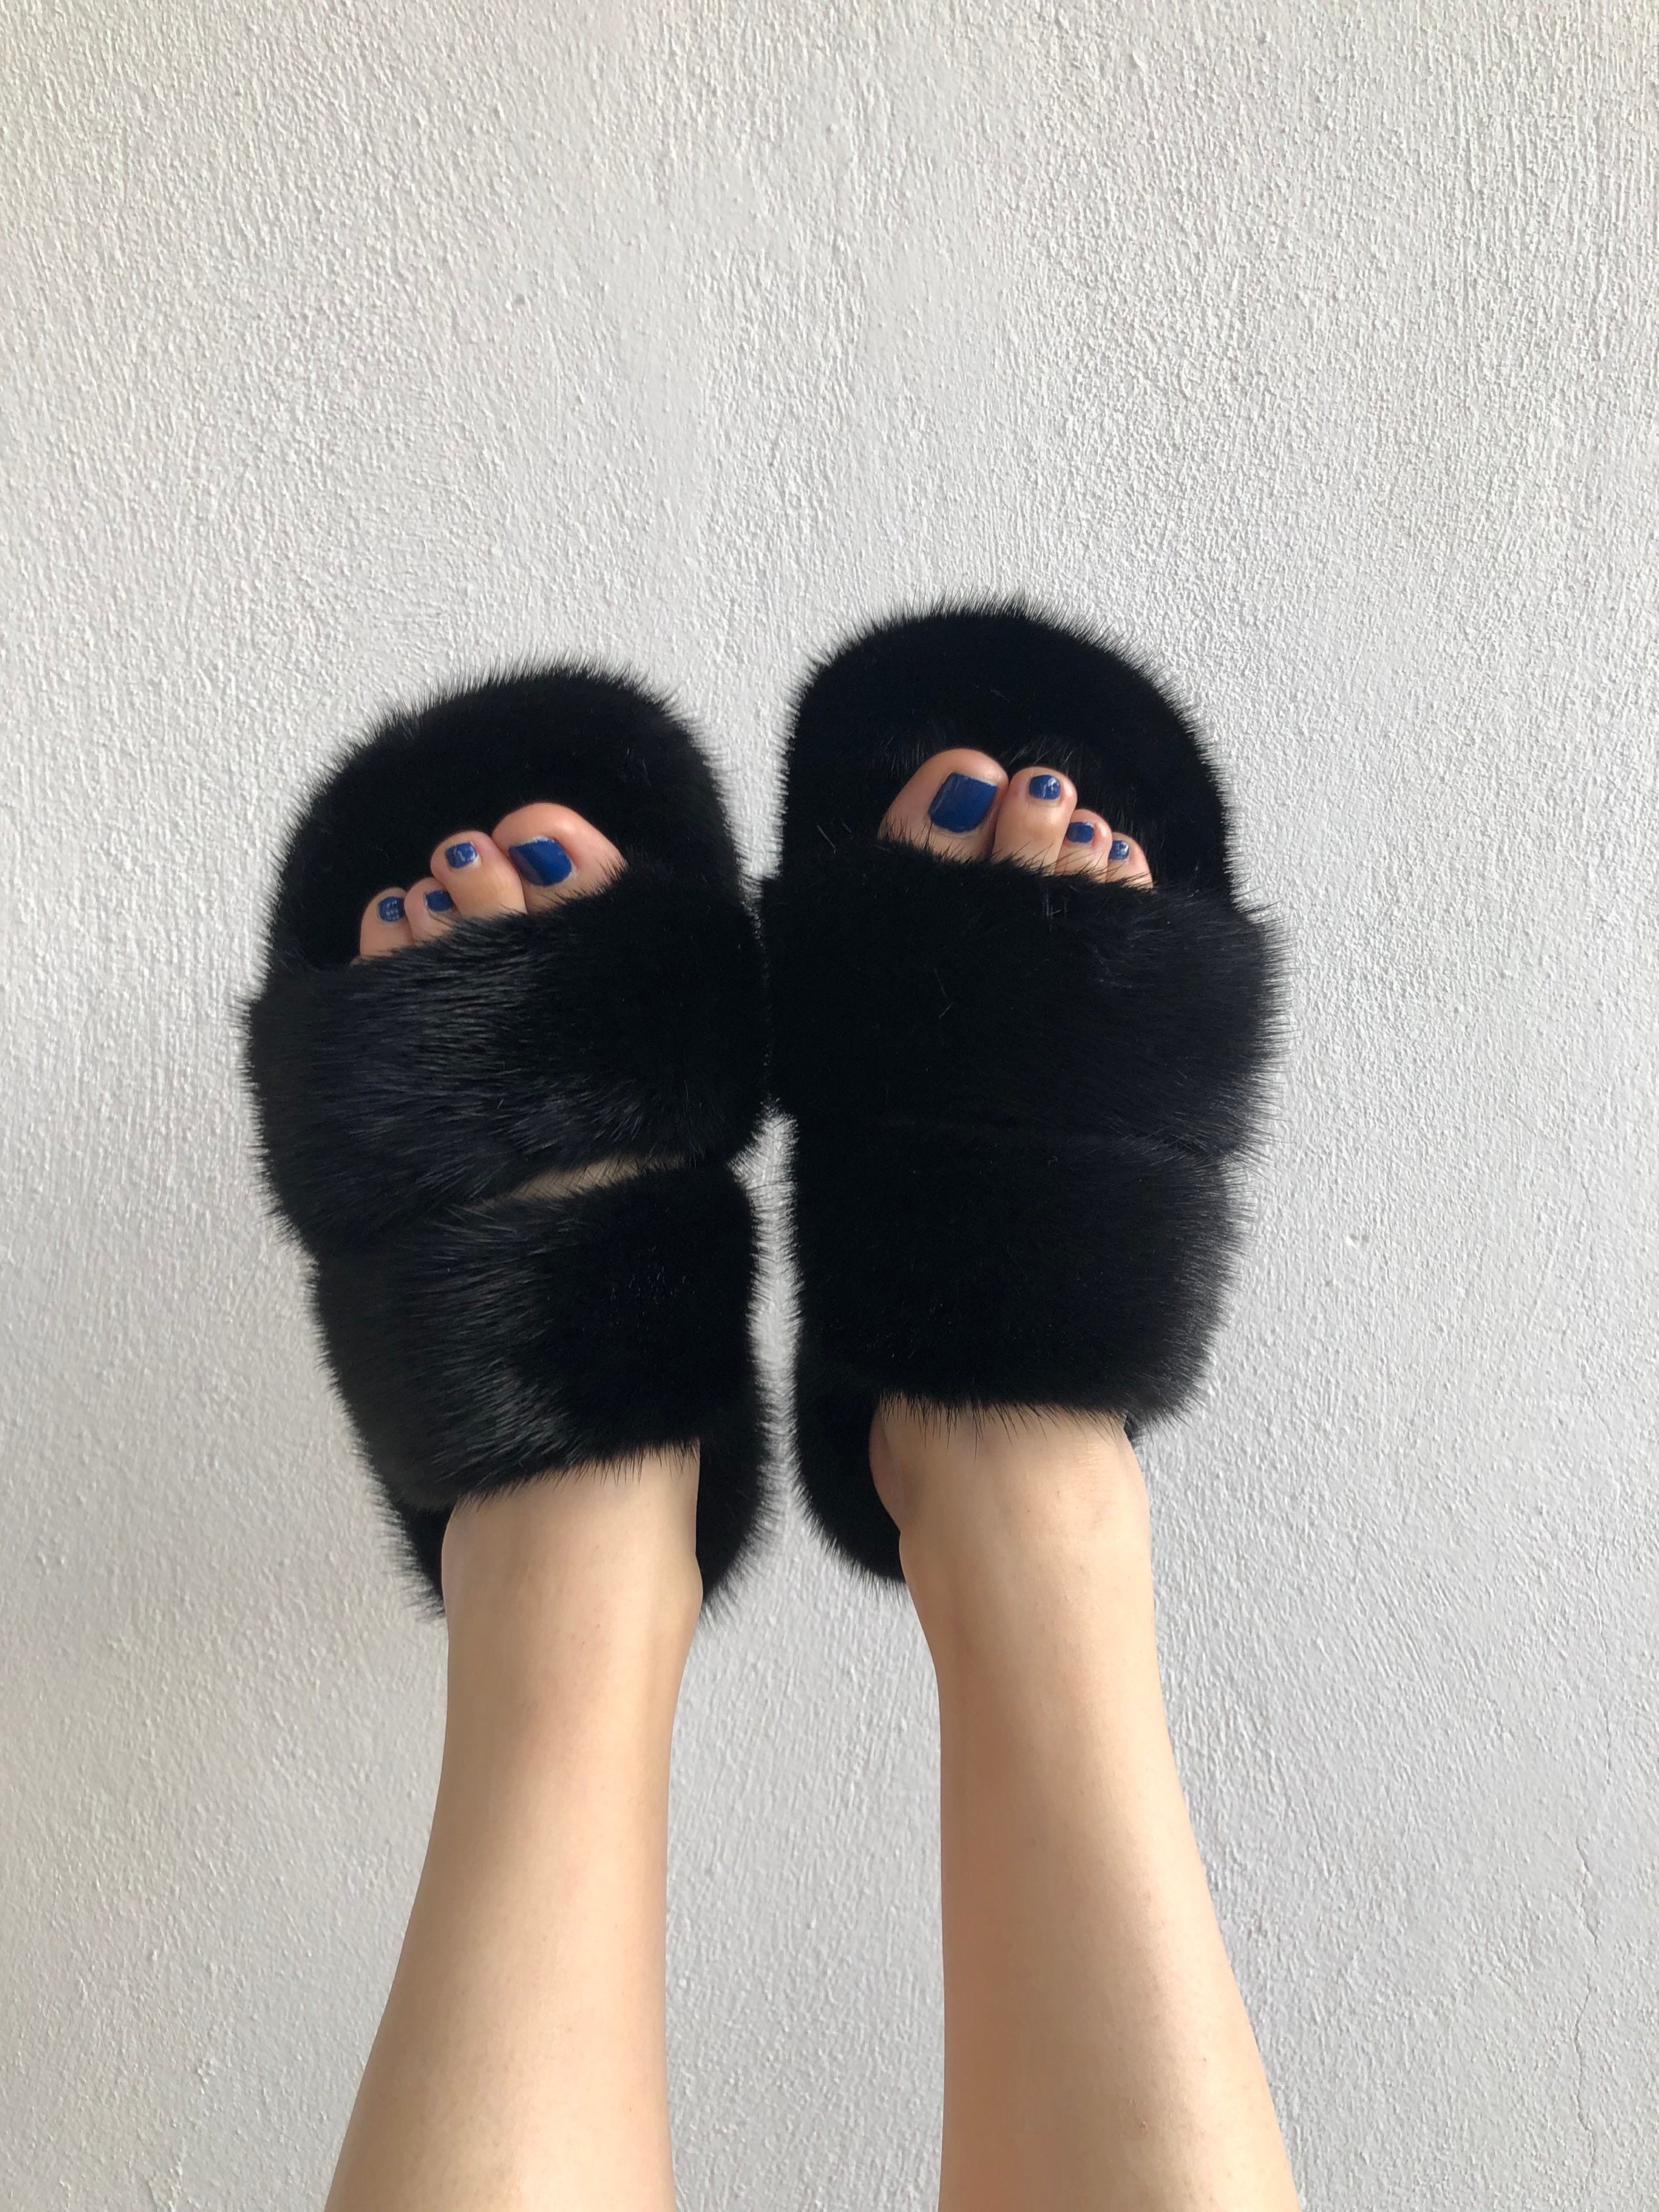 Real Fur Slides in Black Mink Full Skin Rubber Fur Slippon | Etsy